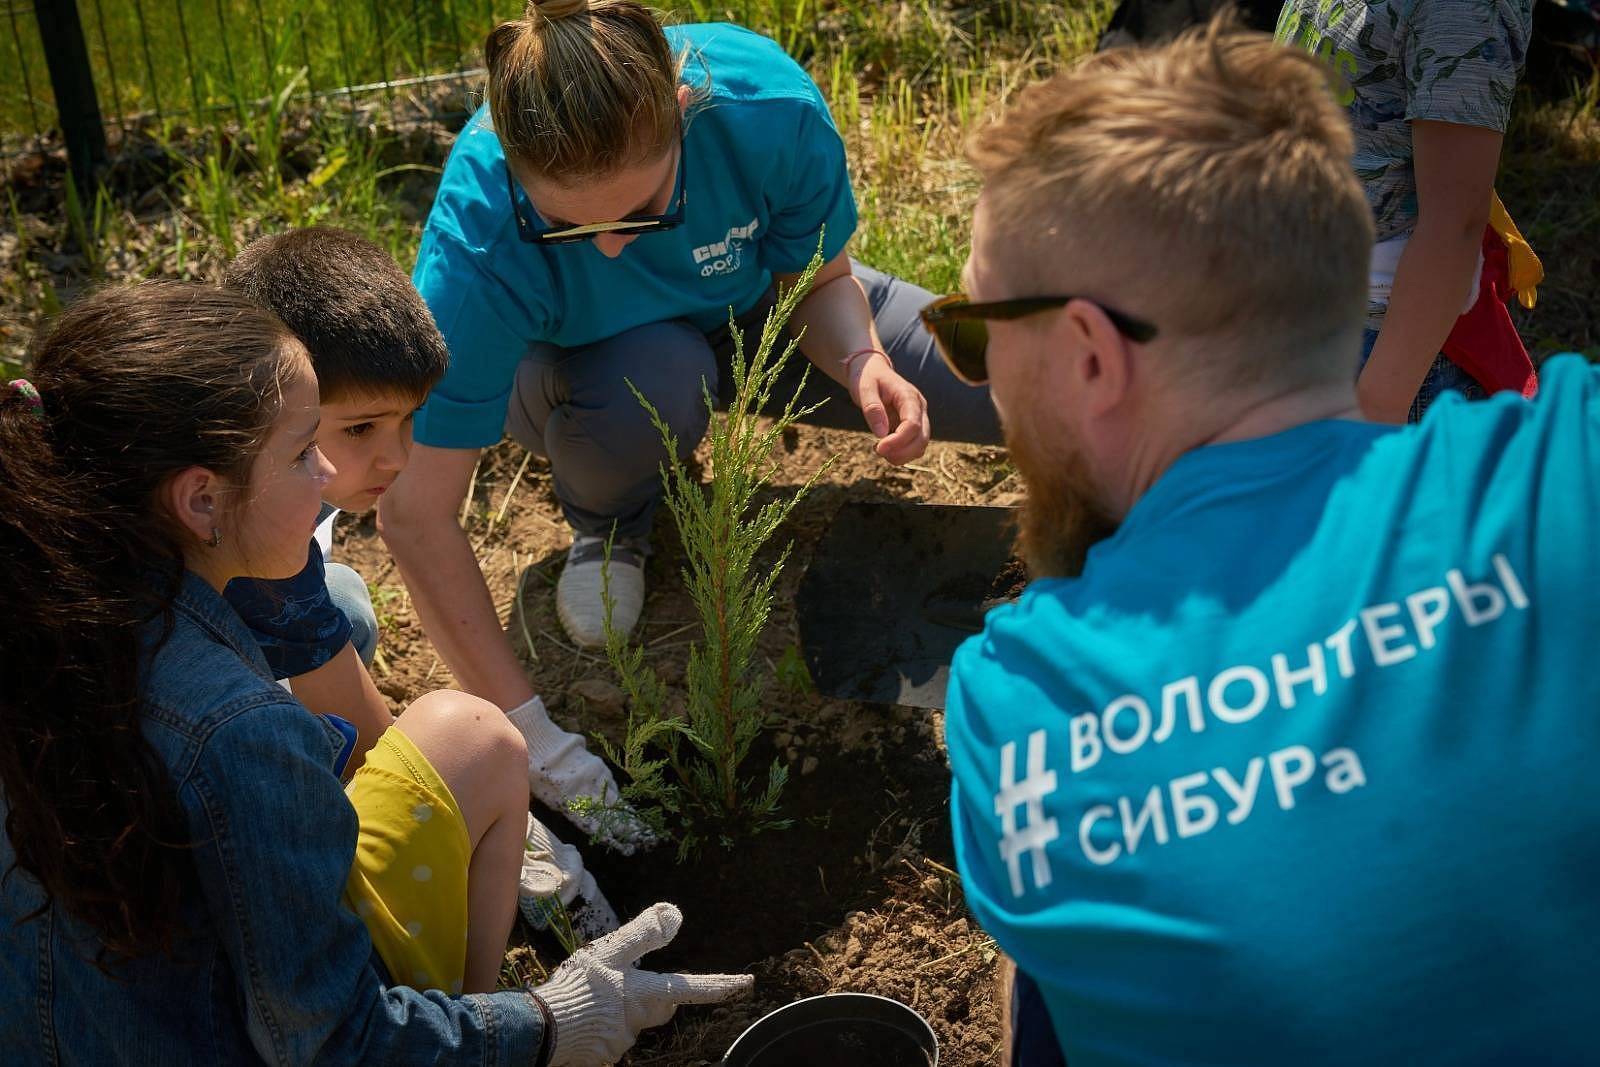 SIBUR helped build a garden of 100 junipers in Moscow